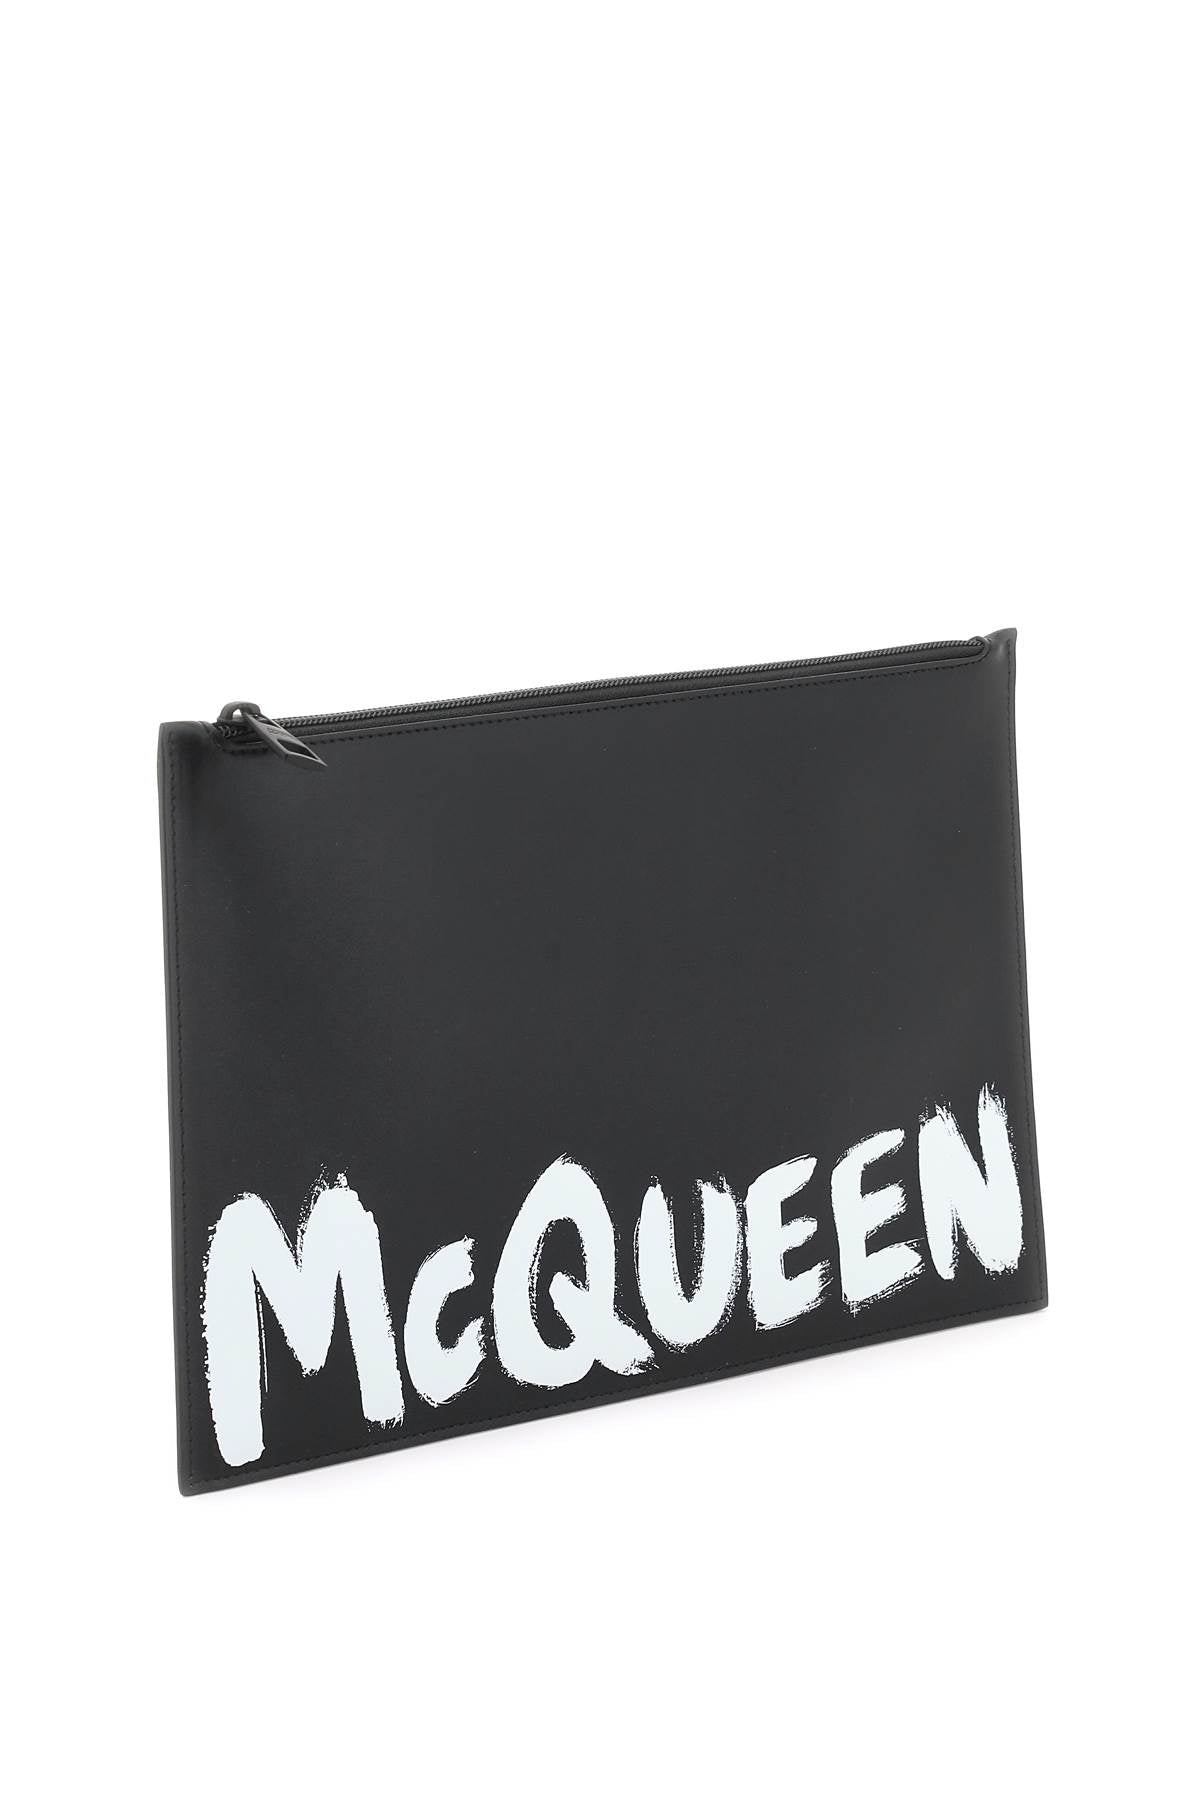 'Mcqueen Graffiti' Leather Flat Pouch - 4